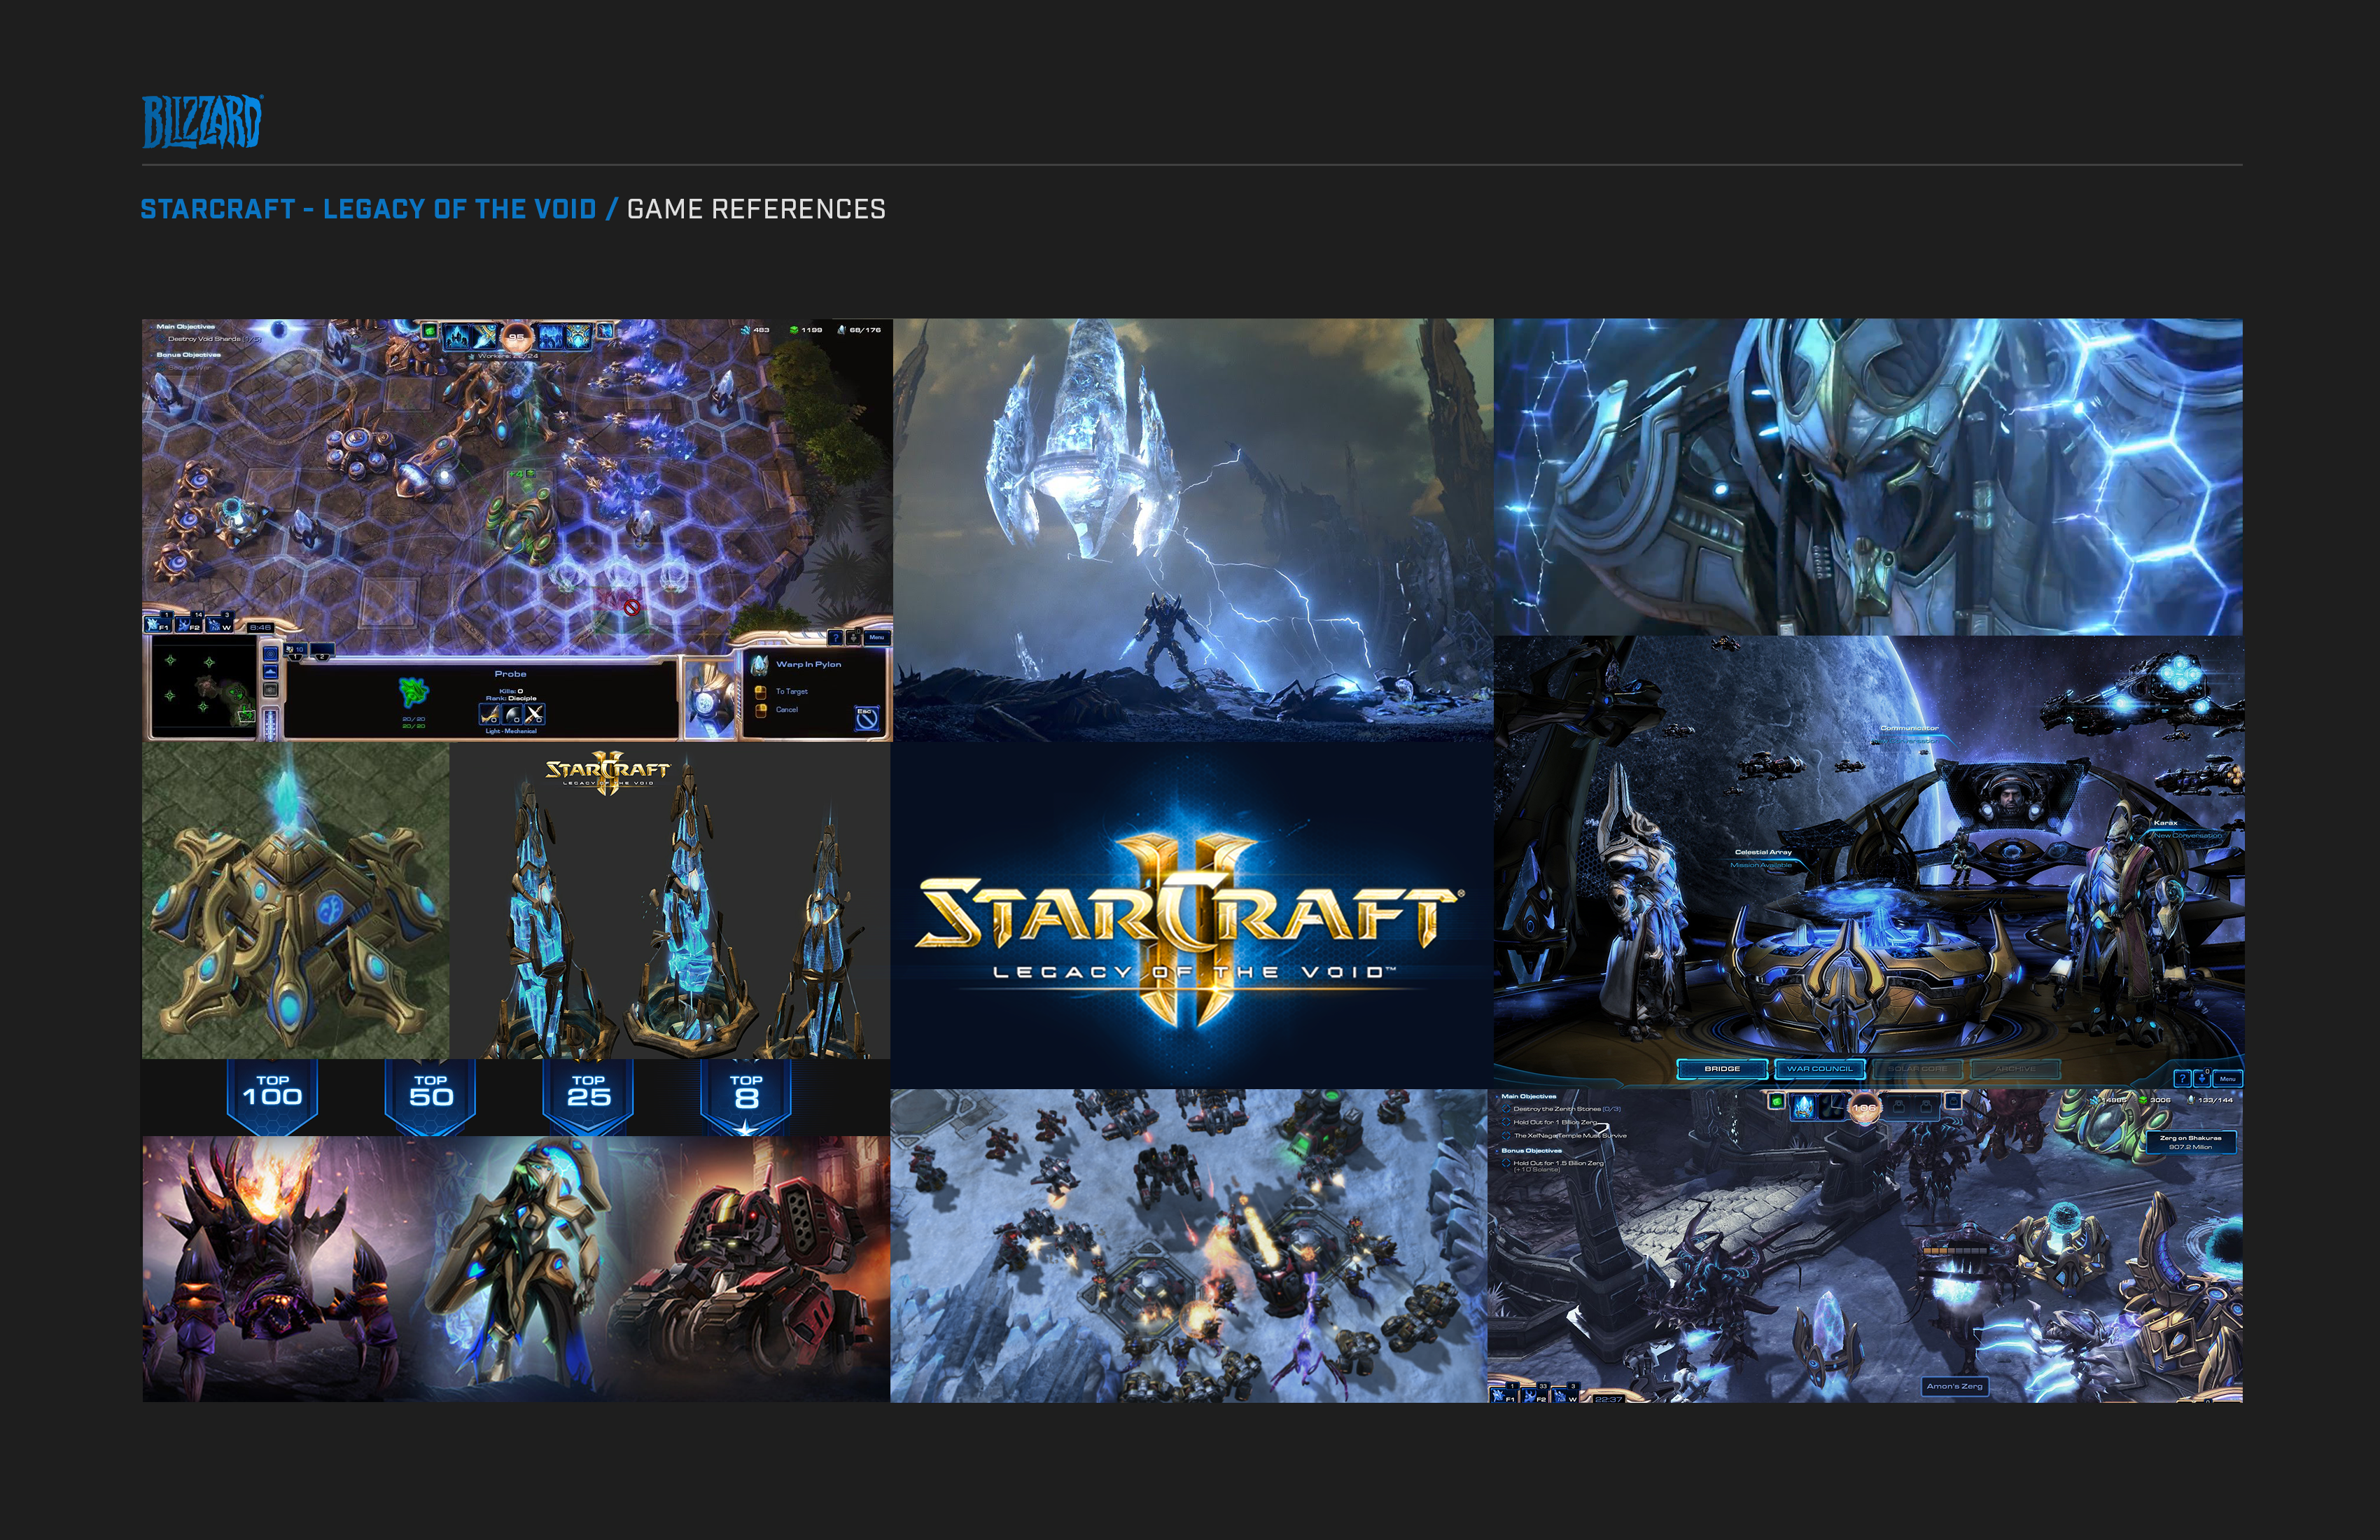 Blizzard_MoGraph_Test_Starcraft_Game_Reference_v1b